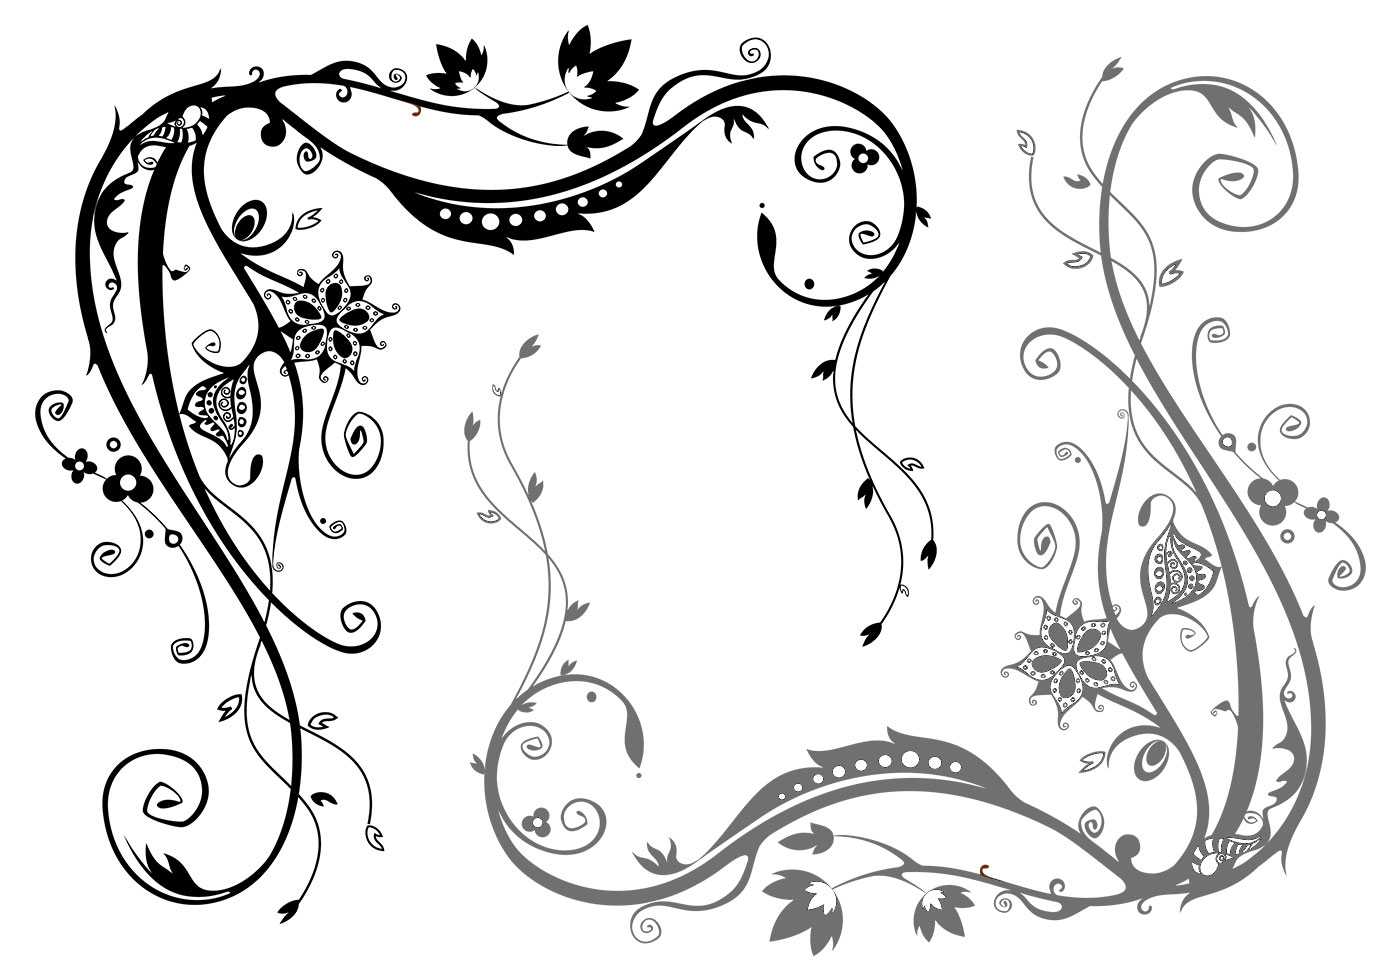 Download Floral Swirl Vector Pack - Download Free Vectors, Clipart Graphics & Vector Art